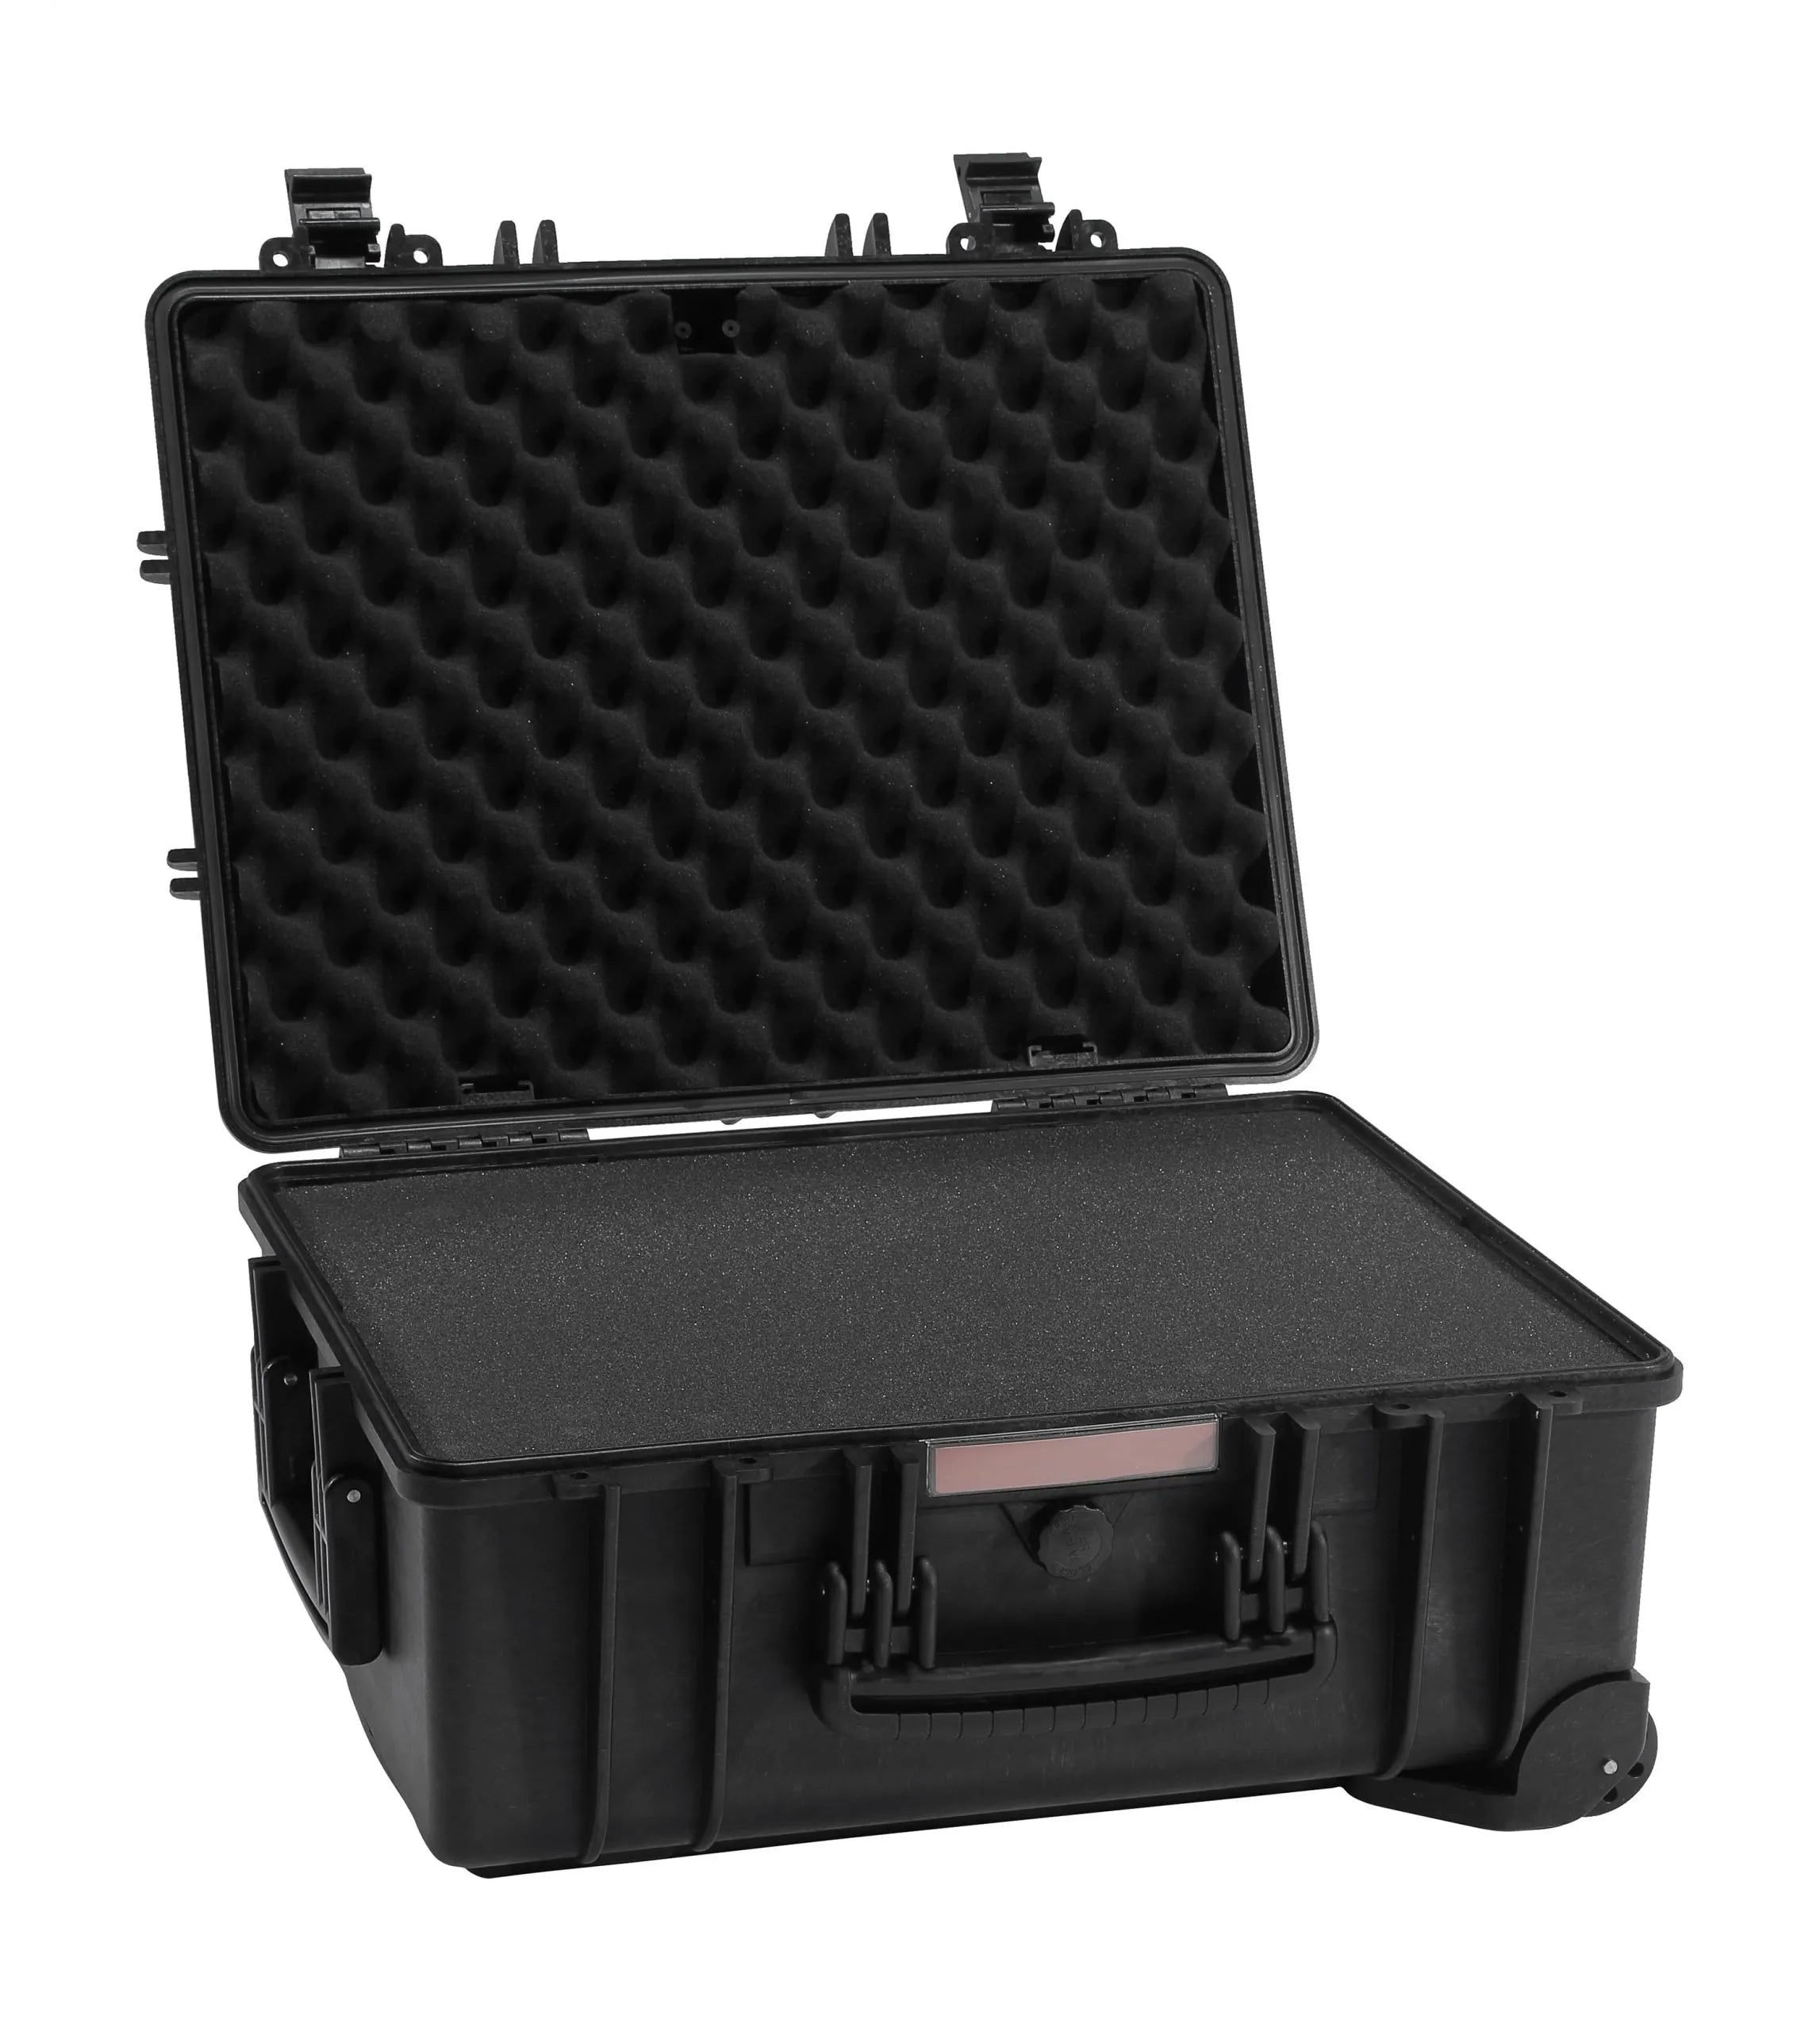 Dracast X Series LED Lighting Kit 31 (x3 DRX240B, Battery Kits, 5304F Travel Case)